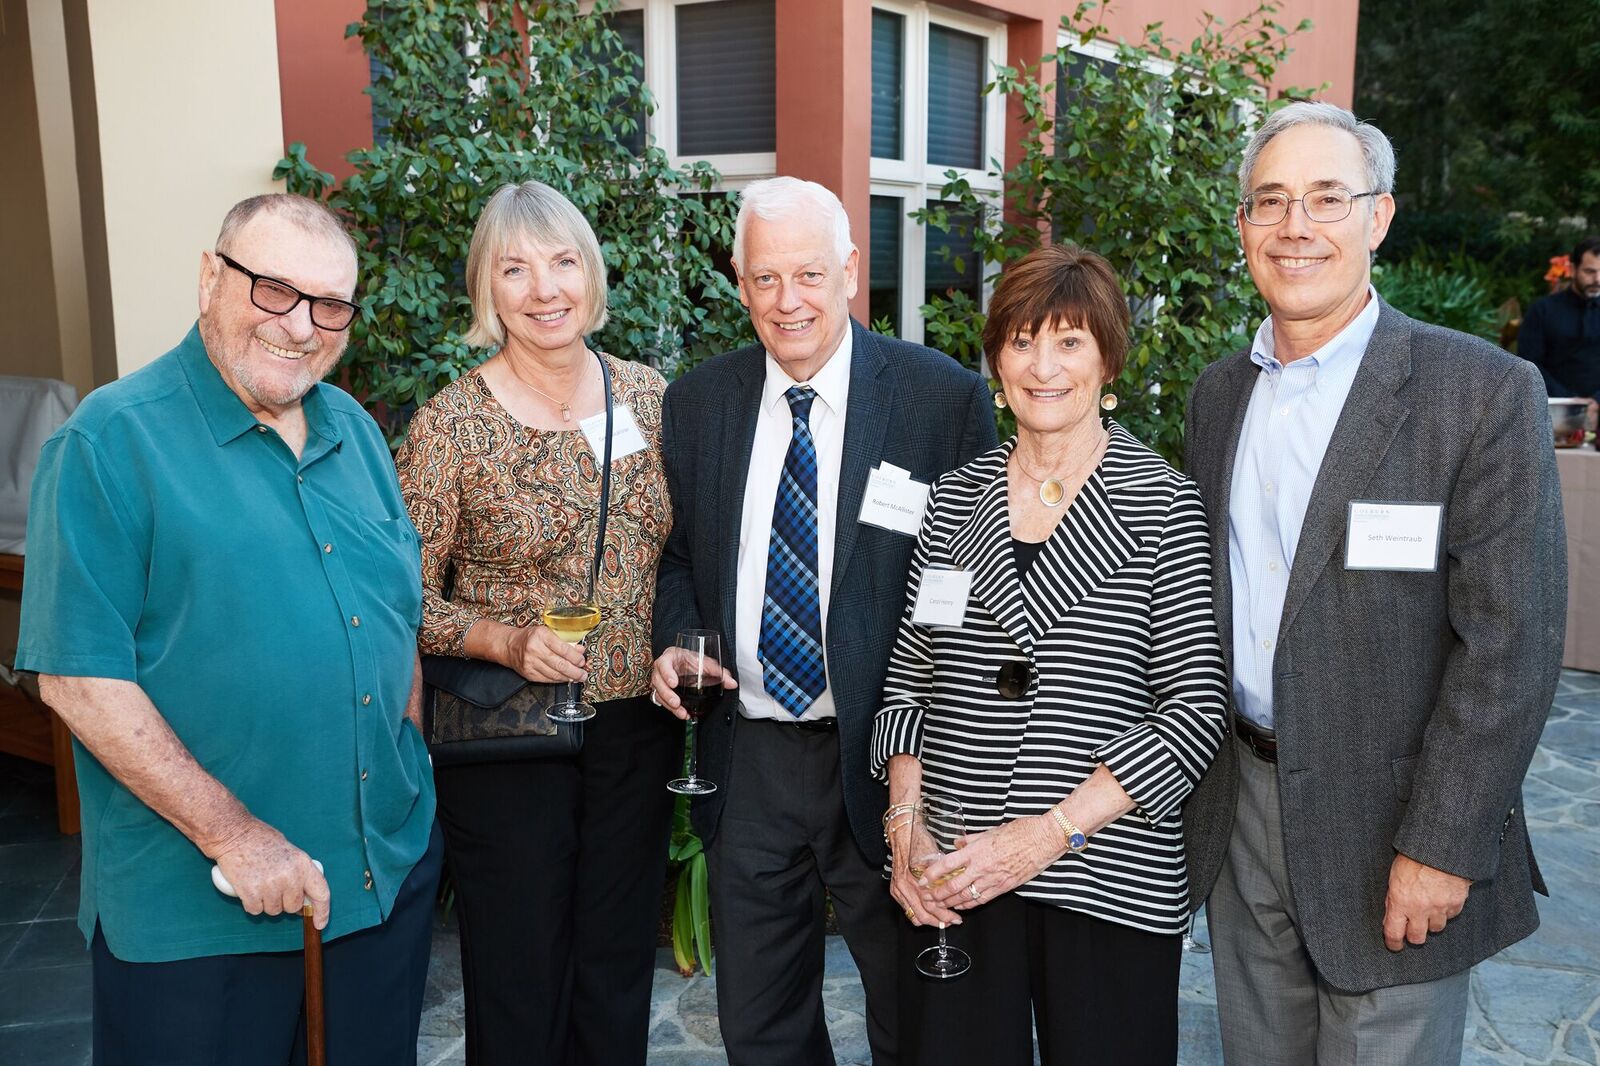 Warner Henry (far left) at the 2017 Colburn Society Annual Celebration 2017